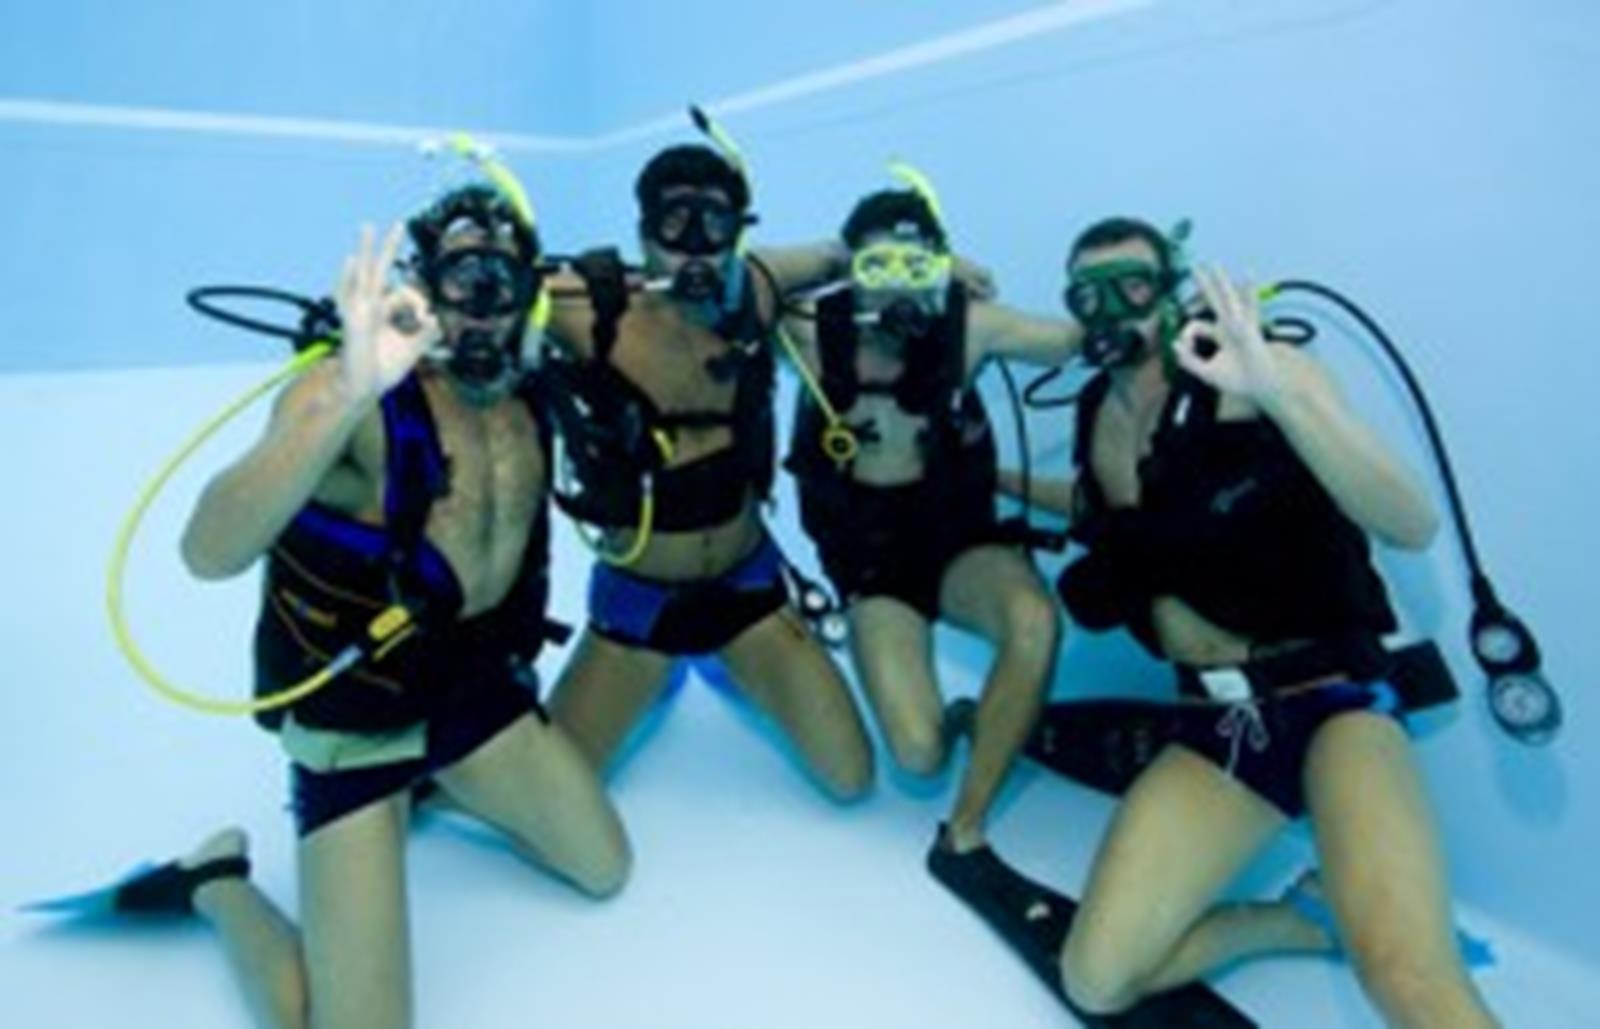 Scuba Diving in the Florida Keys